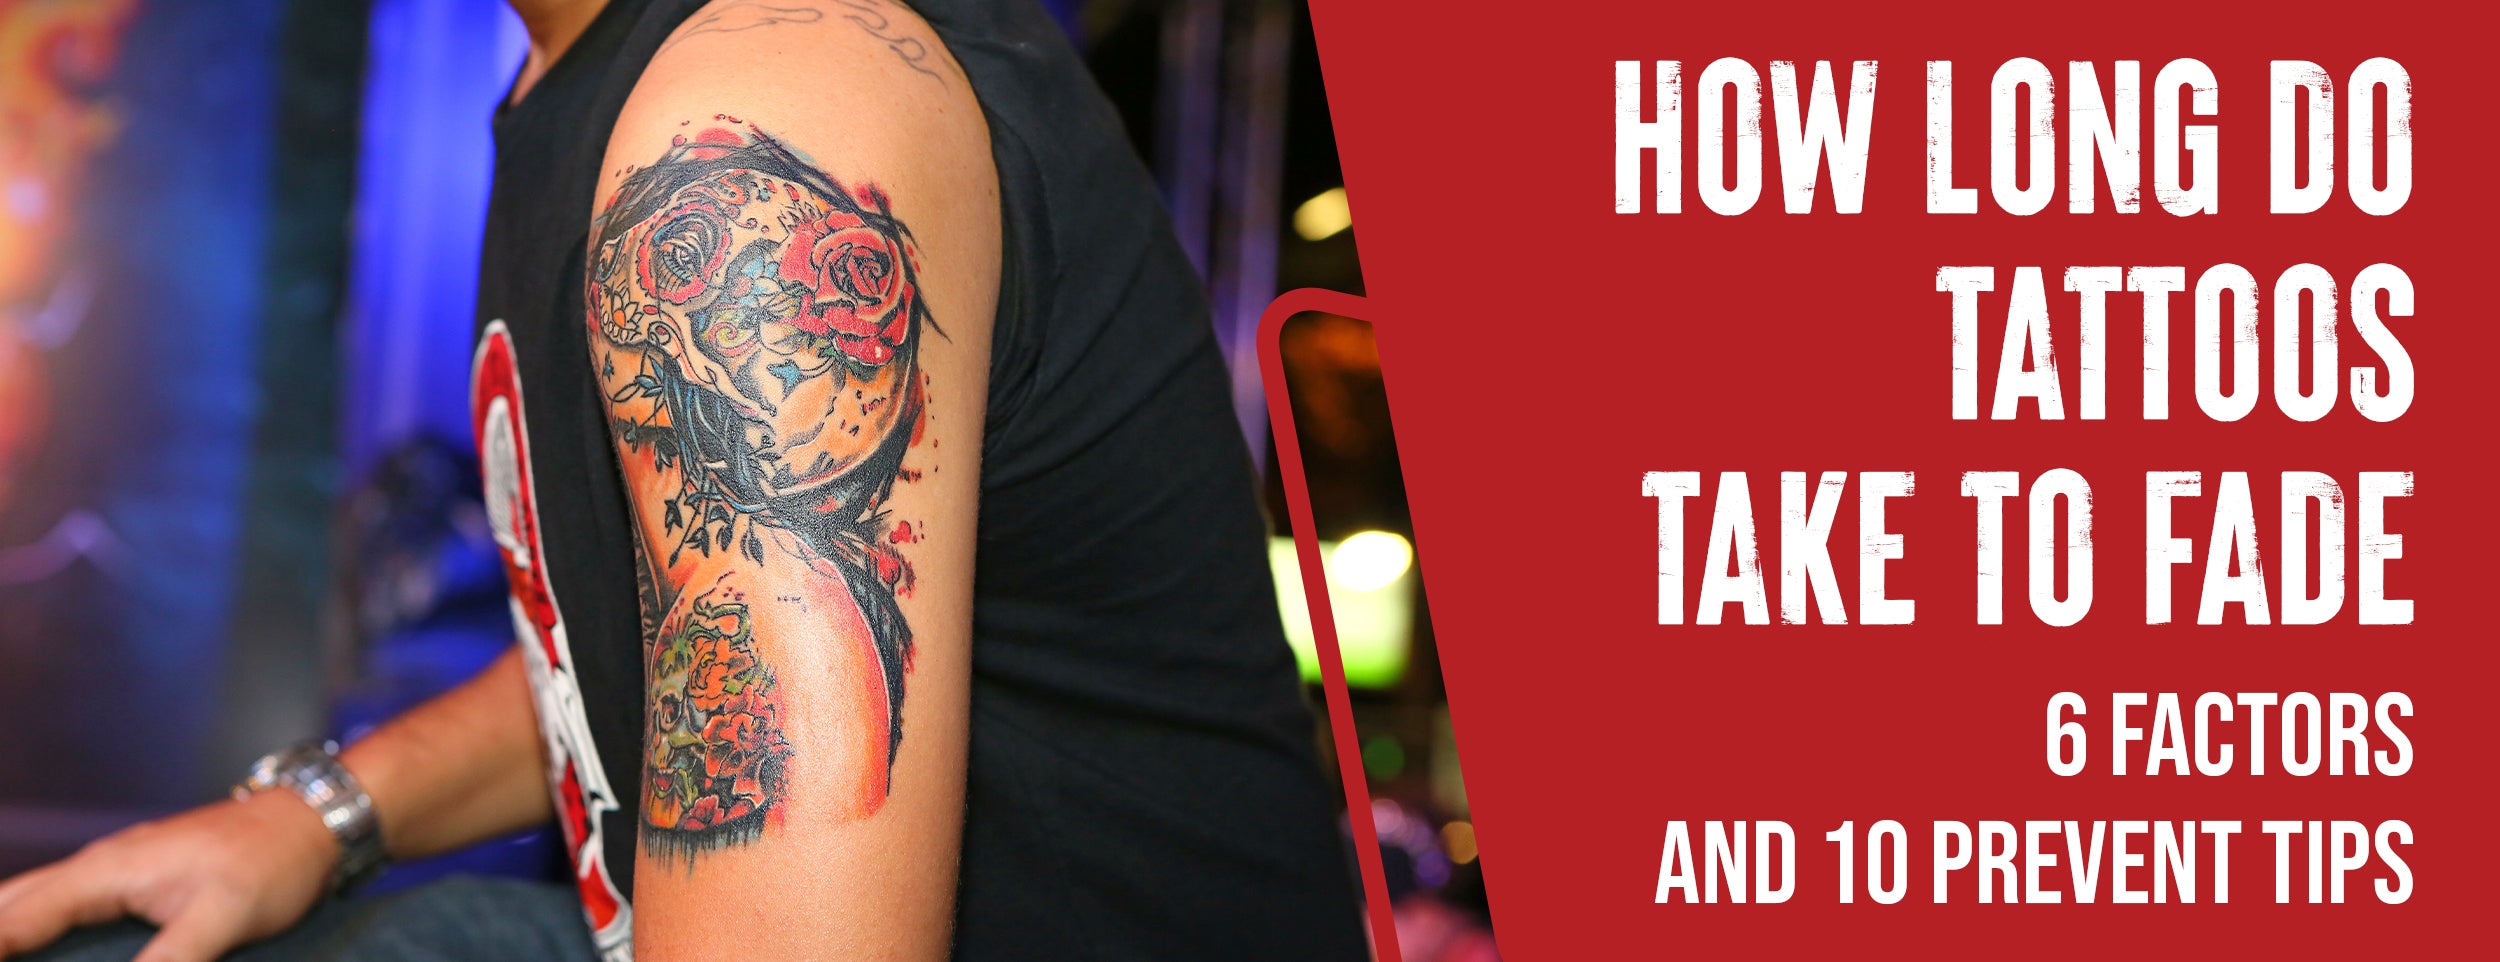 Do Colour Tattoos Fade? Maintaining Vibrancy and Longevity